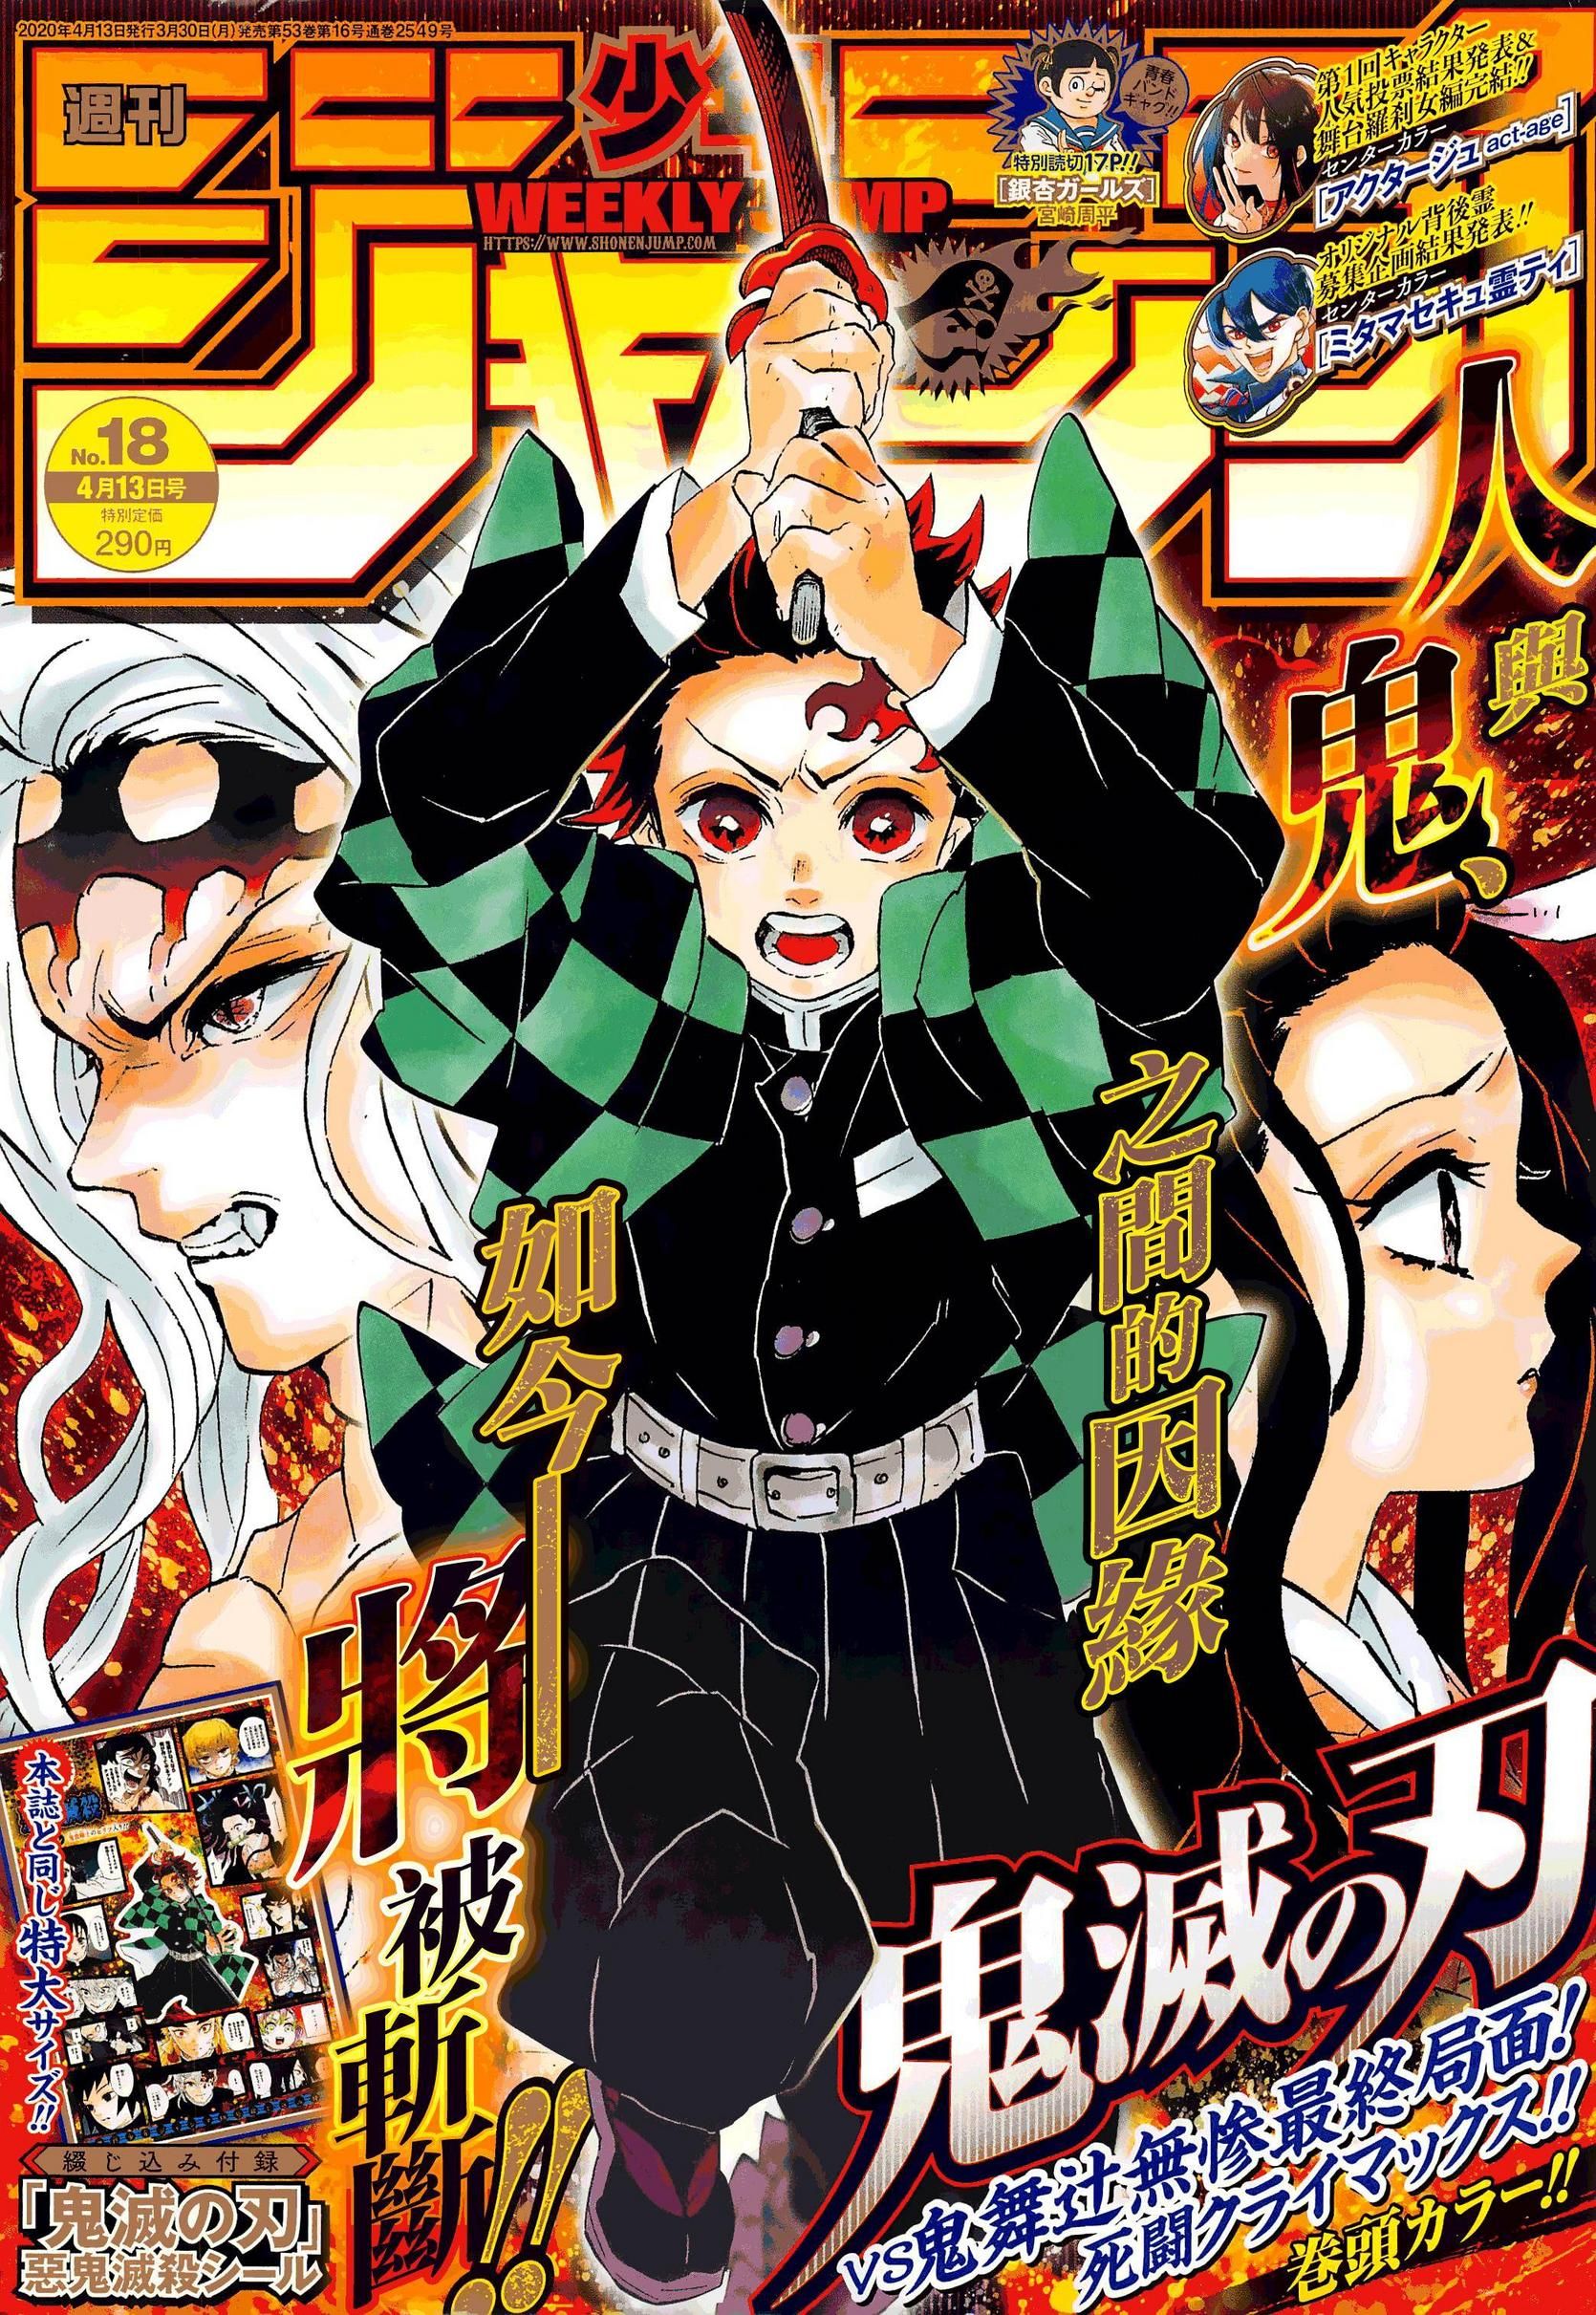 Demon Slayer Kimetsu No Yaiba Chapter 200 Demon Slayer Manga Online